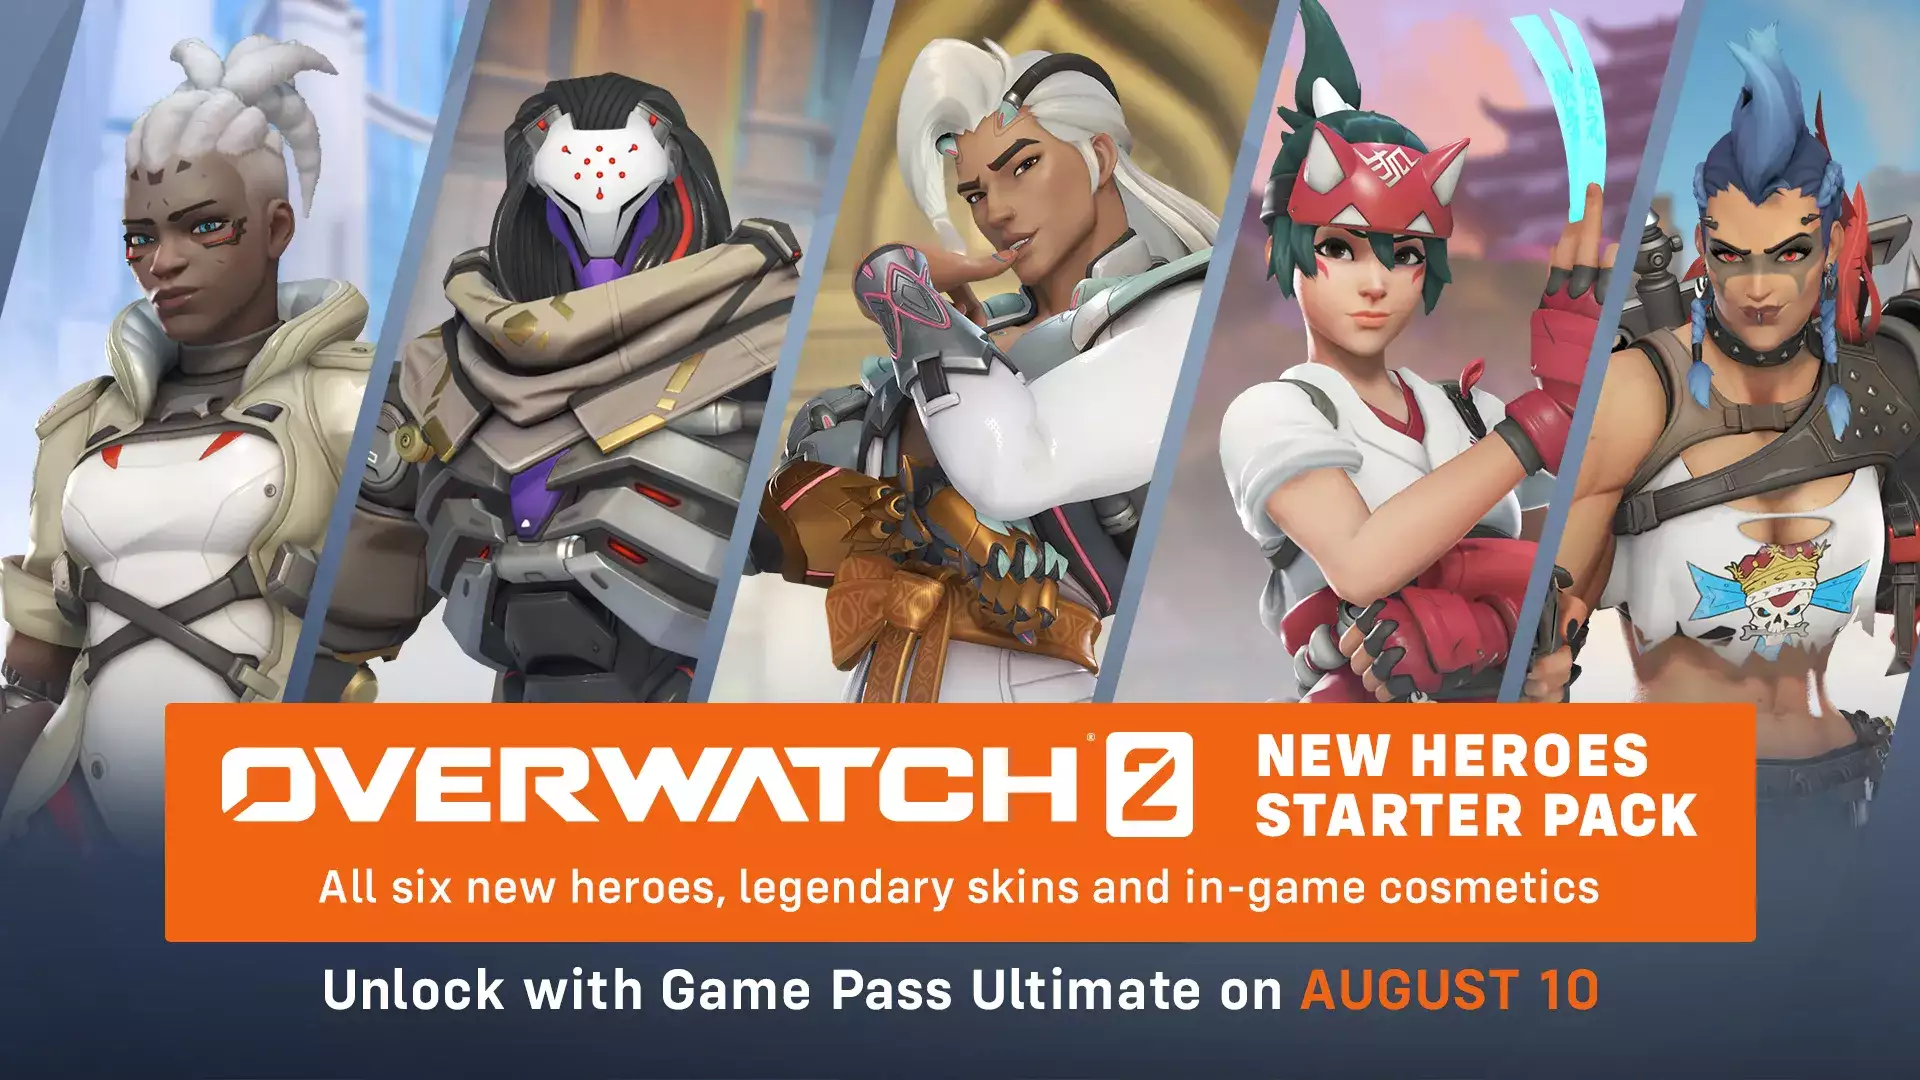 Overwatch 2 New Heroes Starter Pack